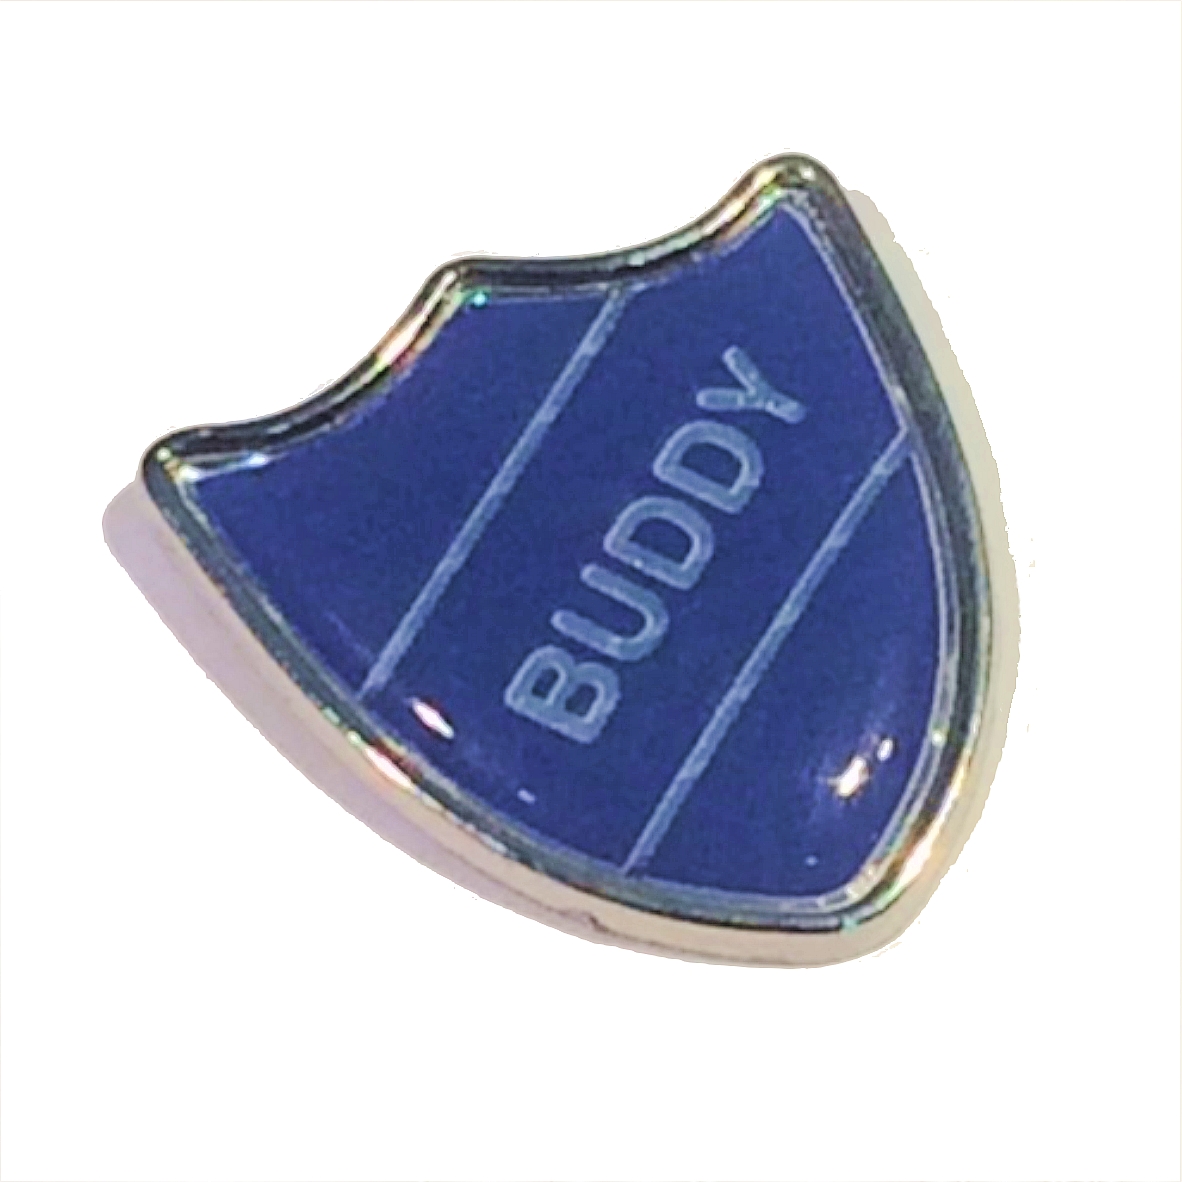 BUDDY shield badge